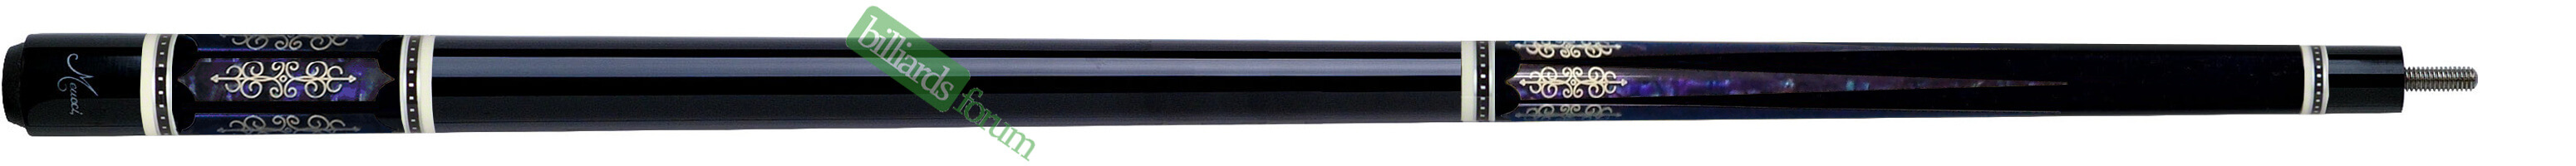 Black Meucci 21st Century Series #3 Cue with Purple Paua Shell Inlay, Model 21-3-C-P